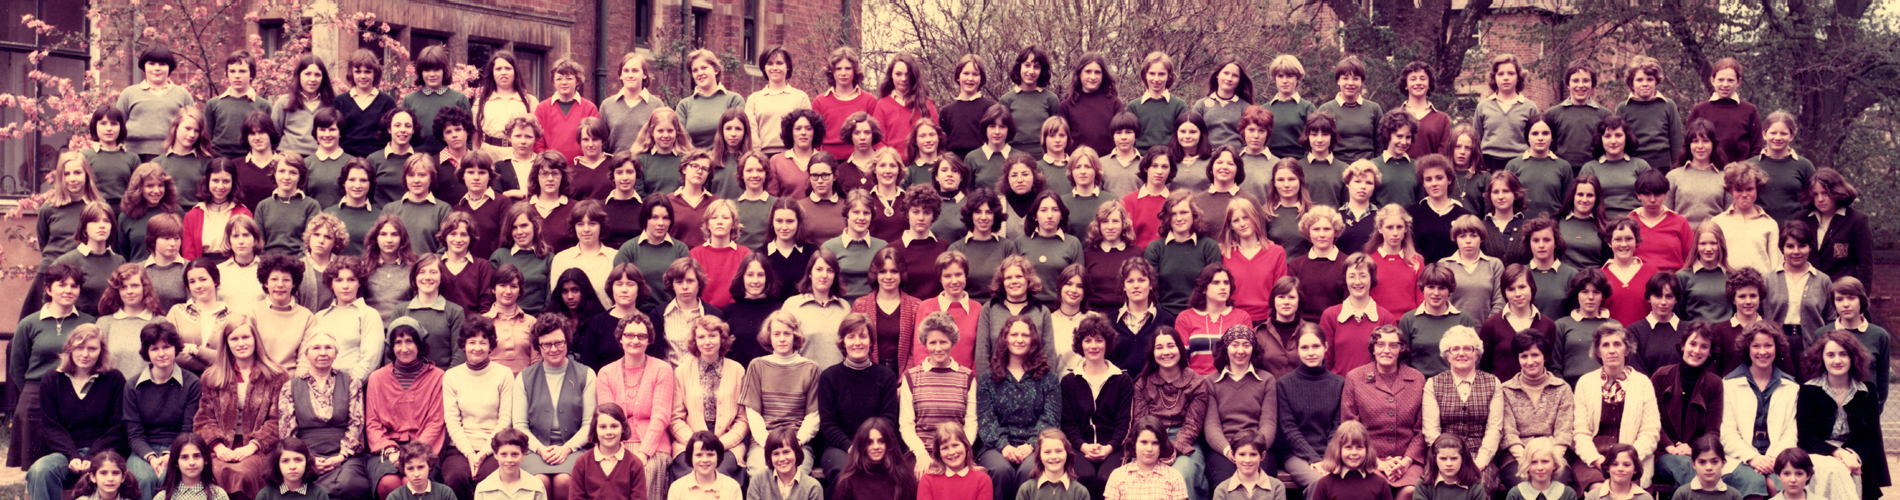 1977 Whole School